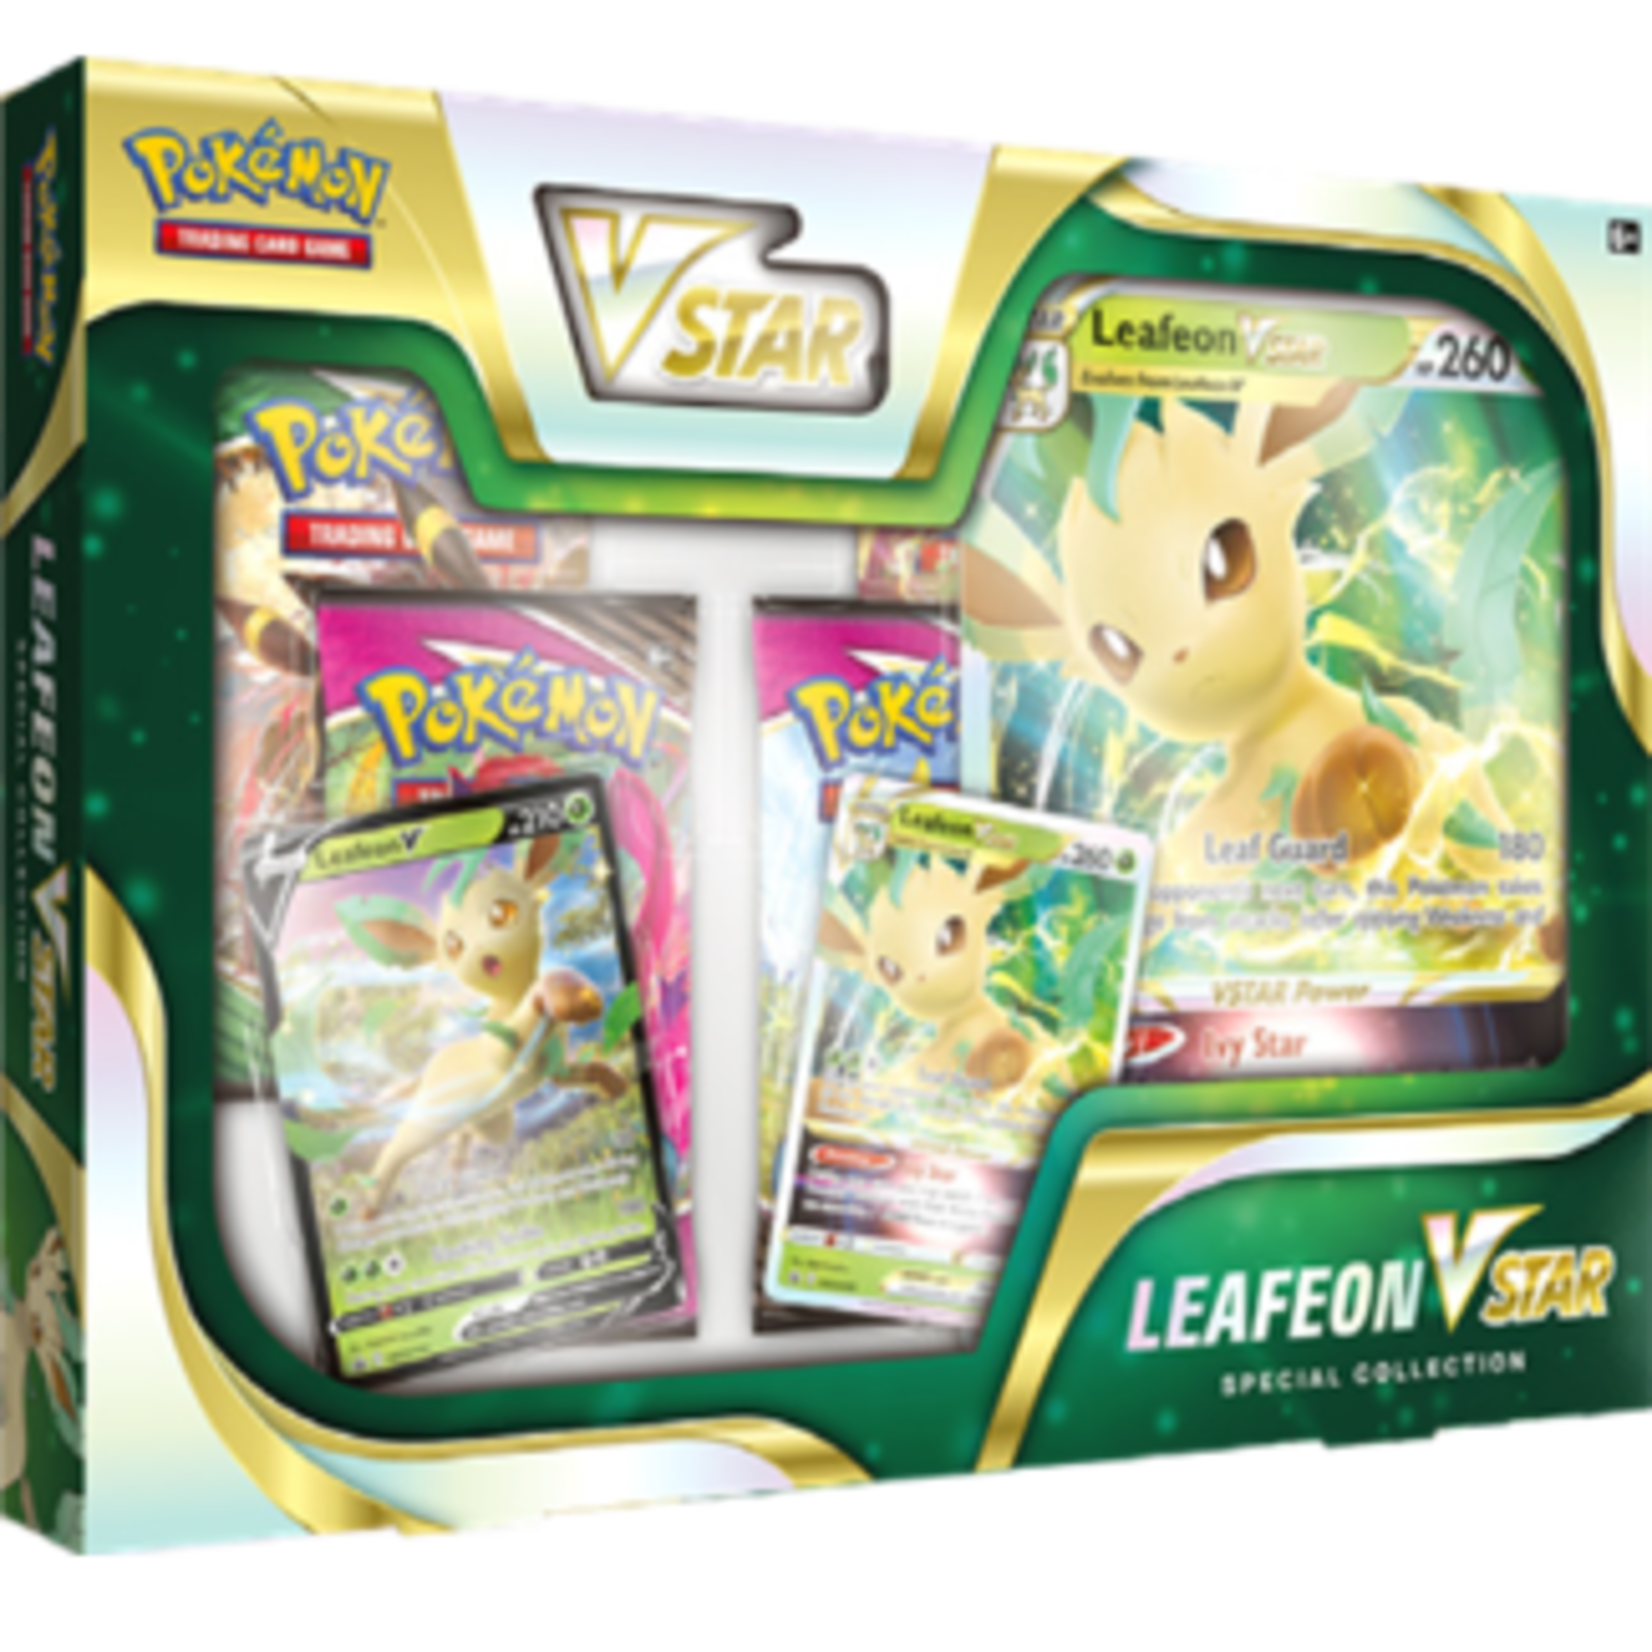 Pokémon TCG - Leafeon Vstar Special Collection